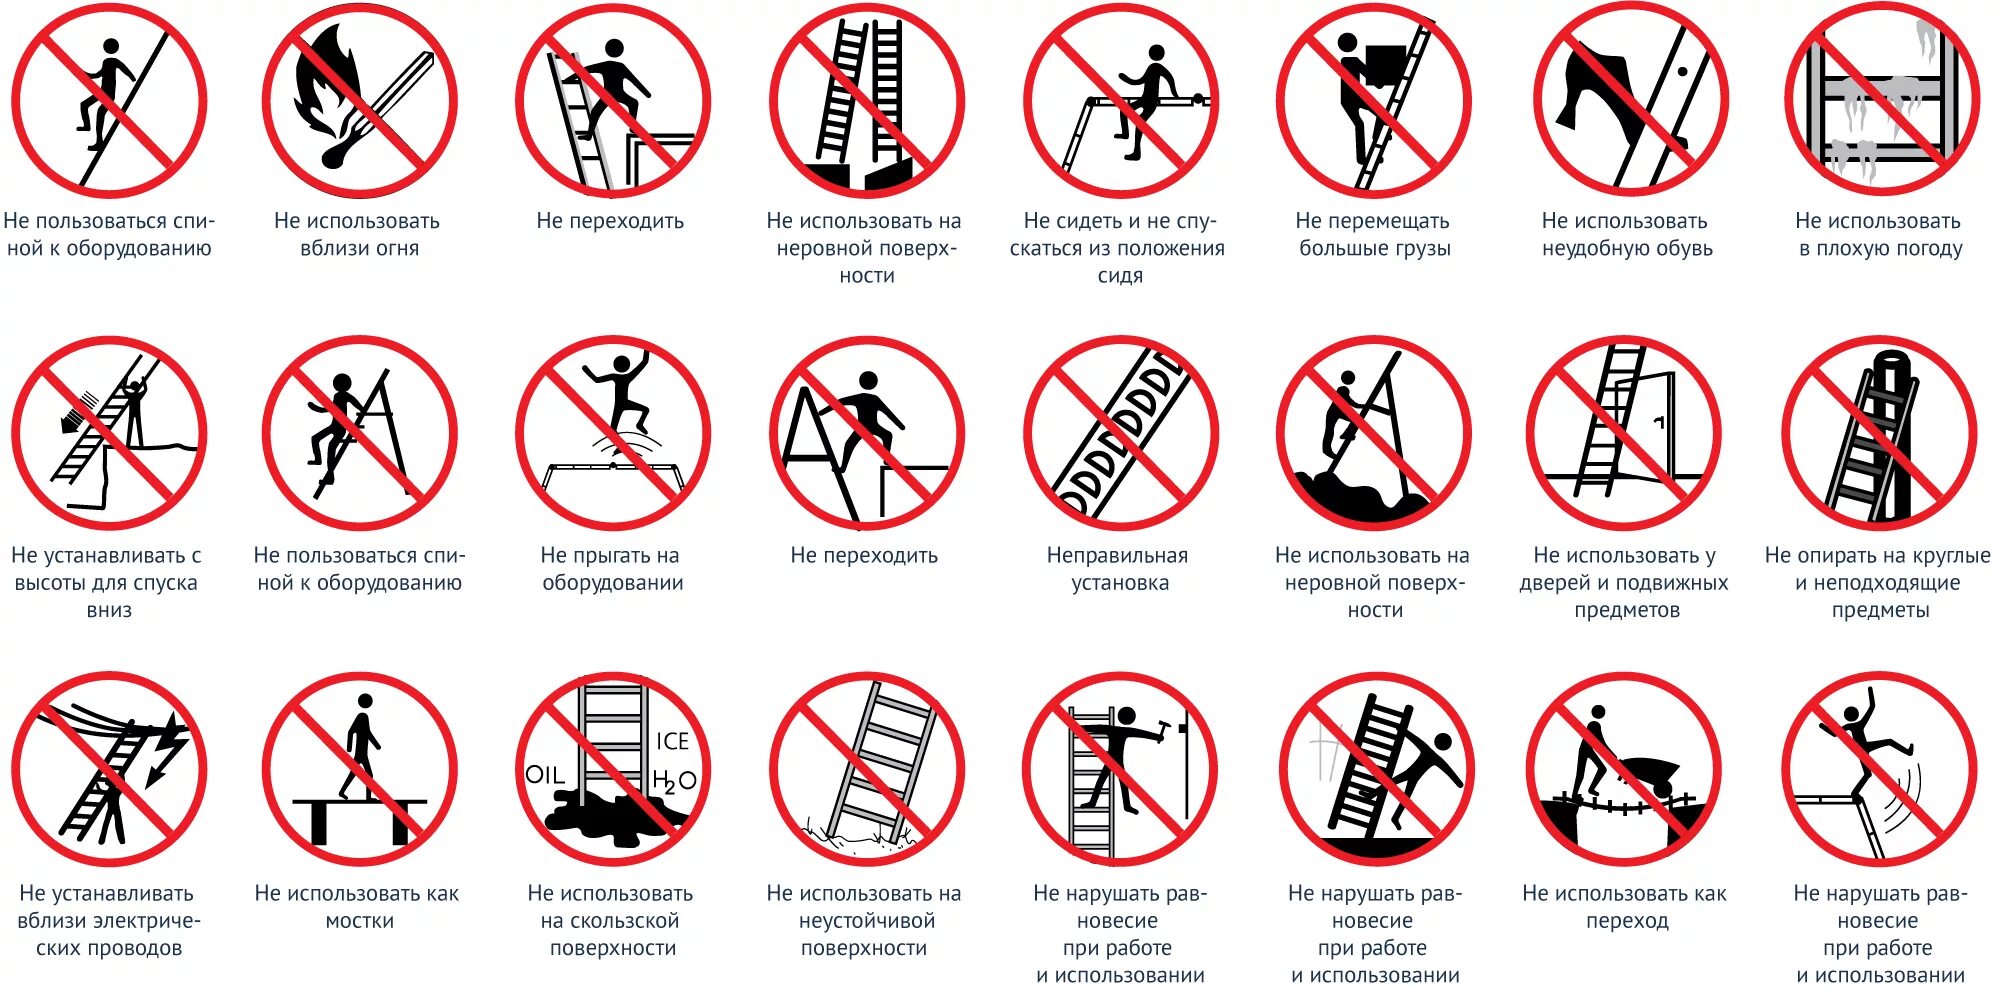 Запрещающие таблички. Знаки правила поведения. Знаки безопасности на эскалаторе. Запрещающие знаки на батуте.